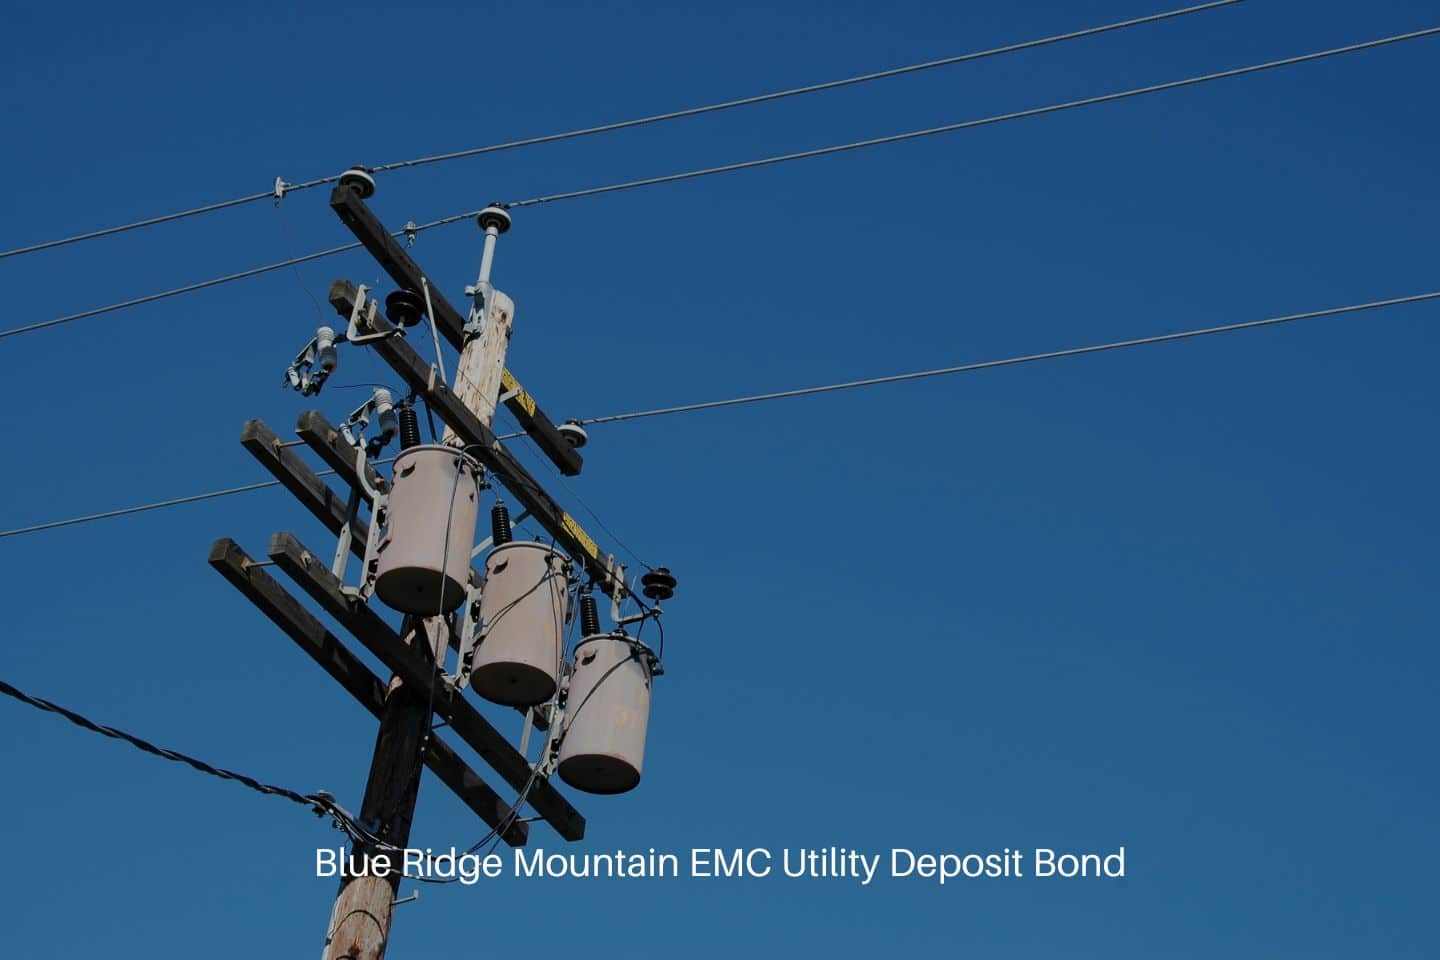 Blue Ridge Mountain EMC Utility Deposit Bond - Utility pole with blue sky in the background.